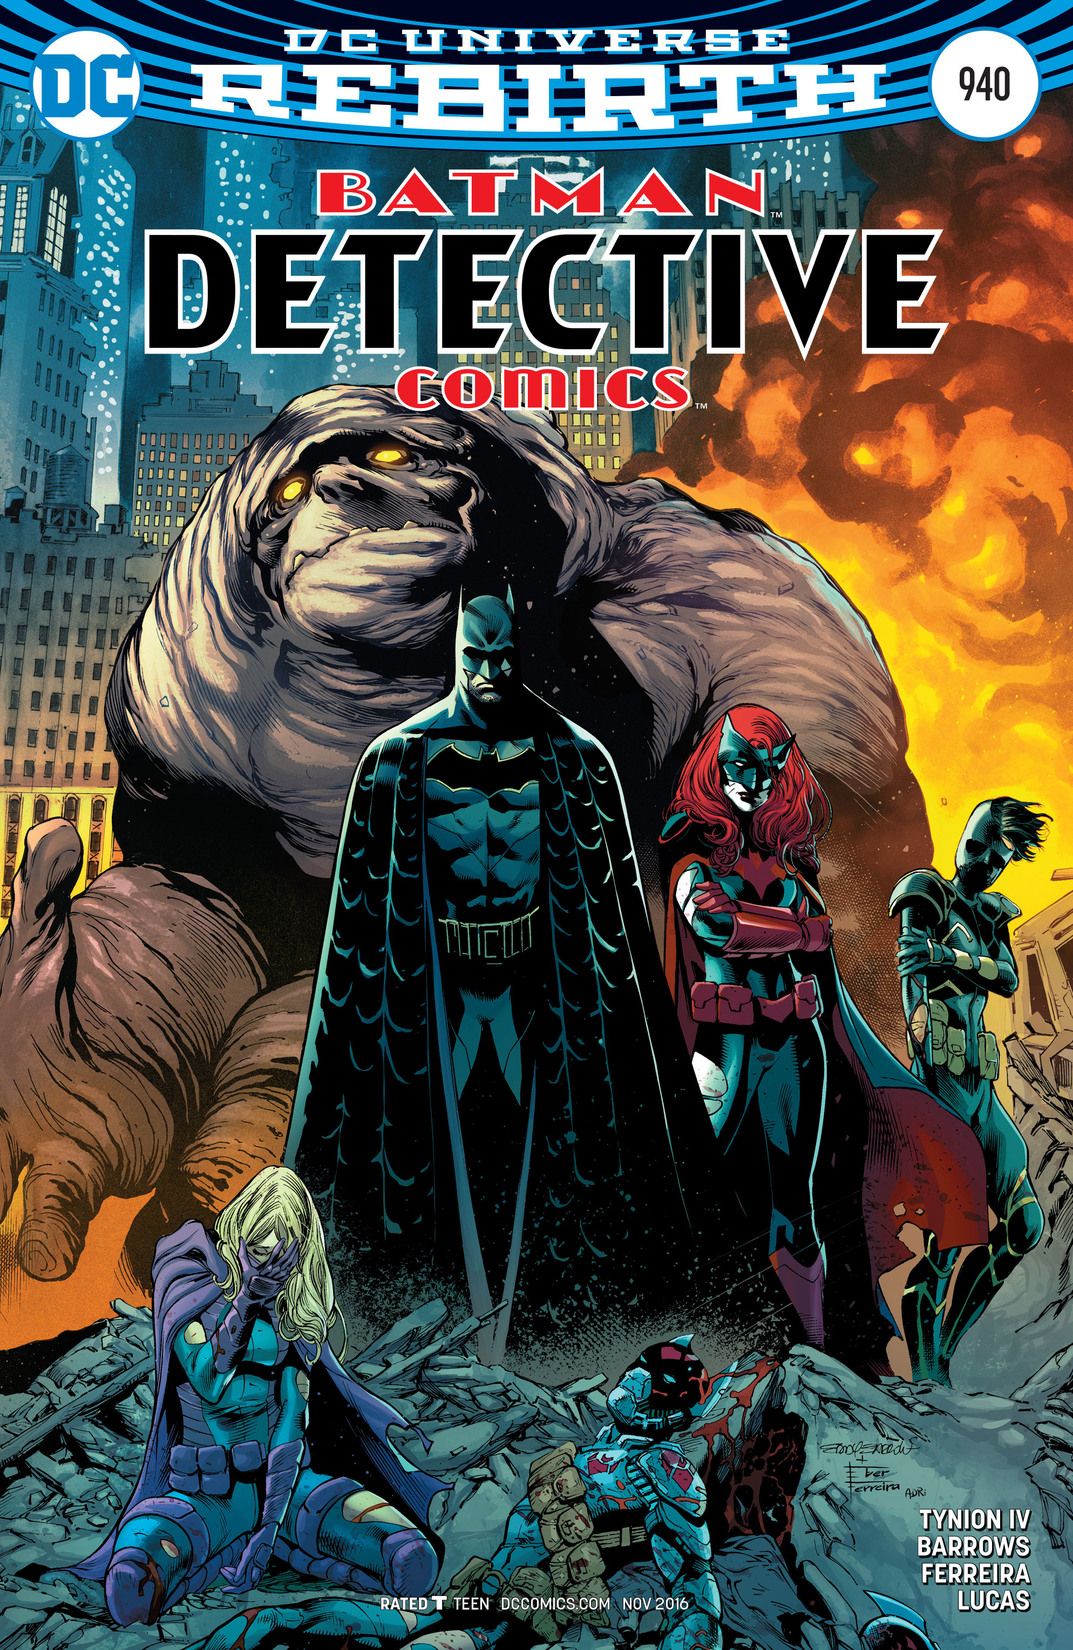 8.0 OR BETTER DETECTIVE COMICS #968 VF JANUARY 2018 BATMAN DC UNIVERSE REBIRTH 